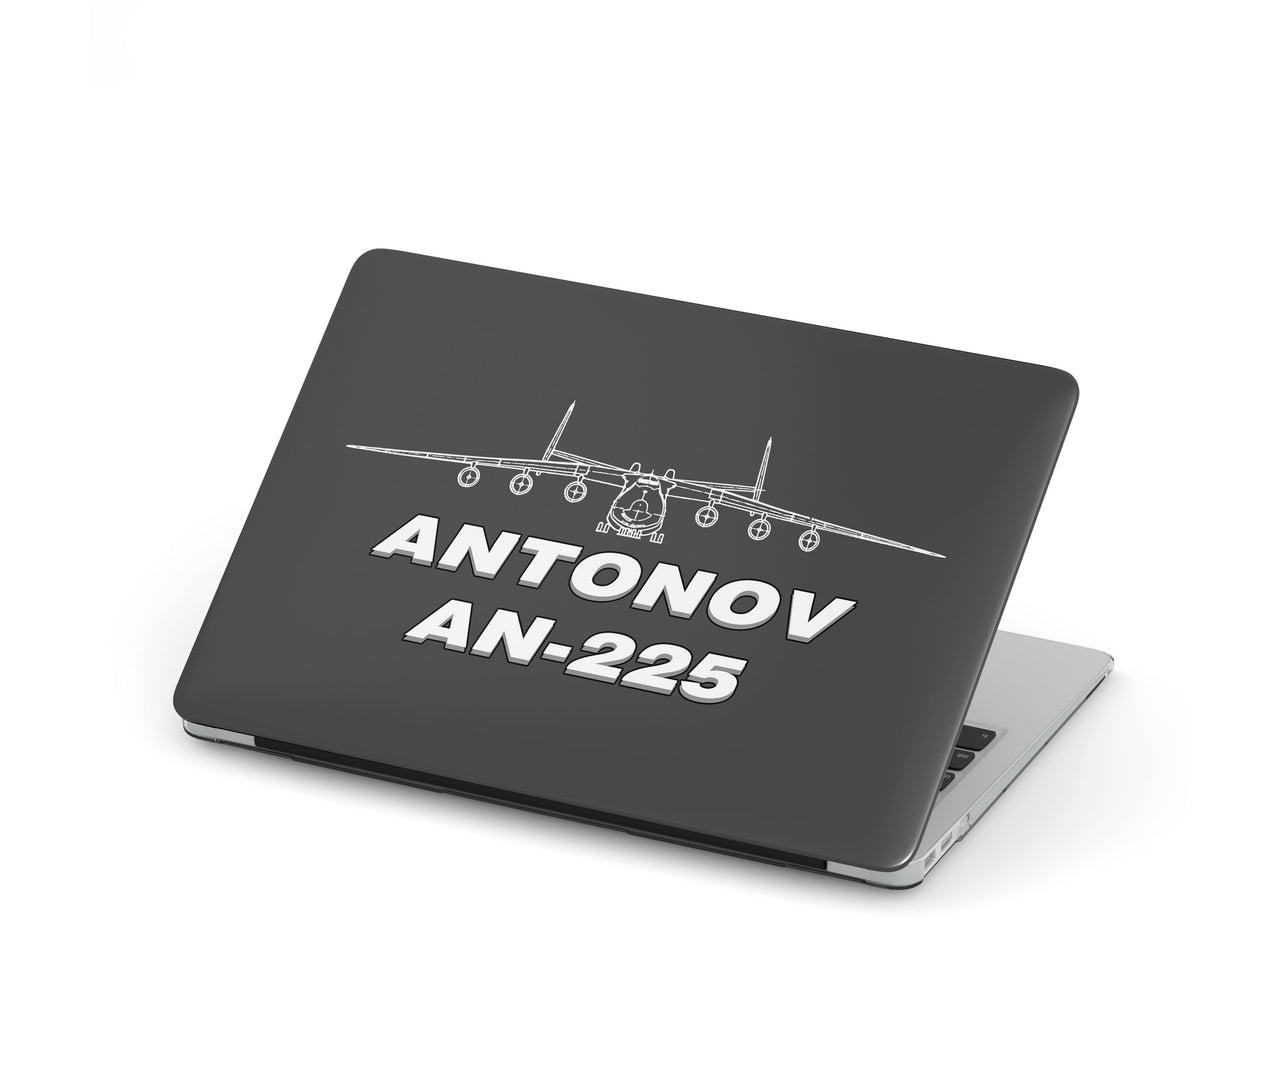 Antonov AN-225 (26) Designed Macbook Cases